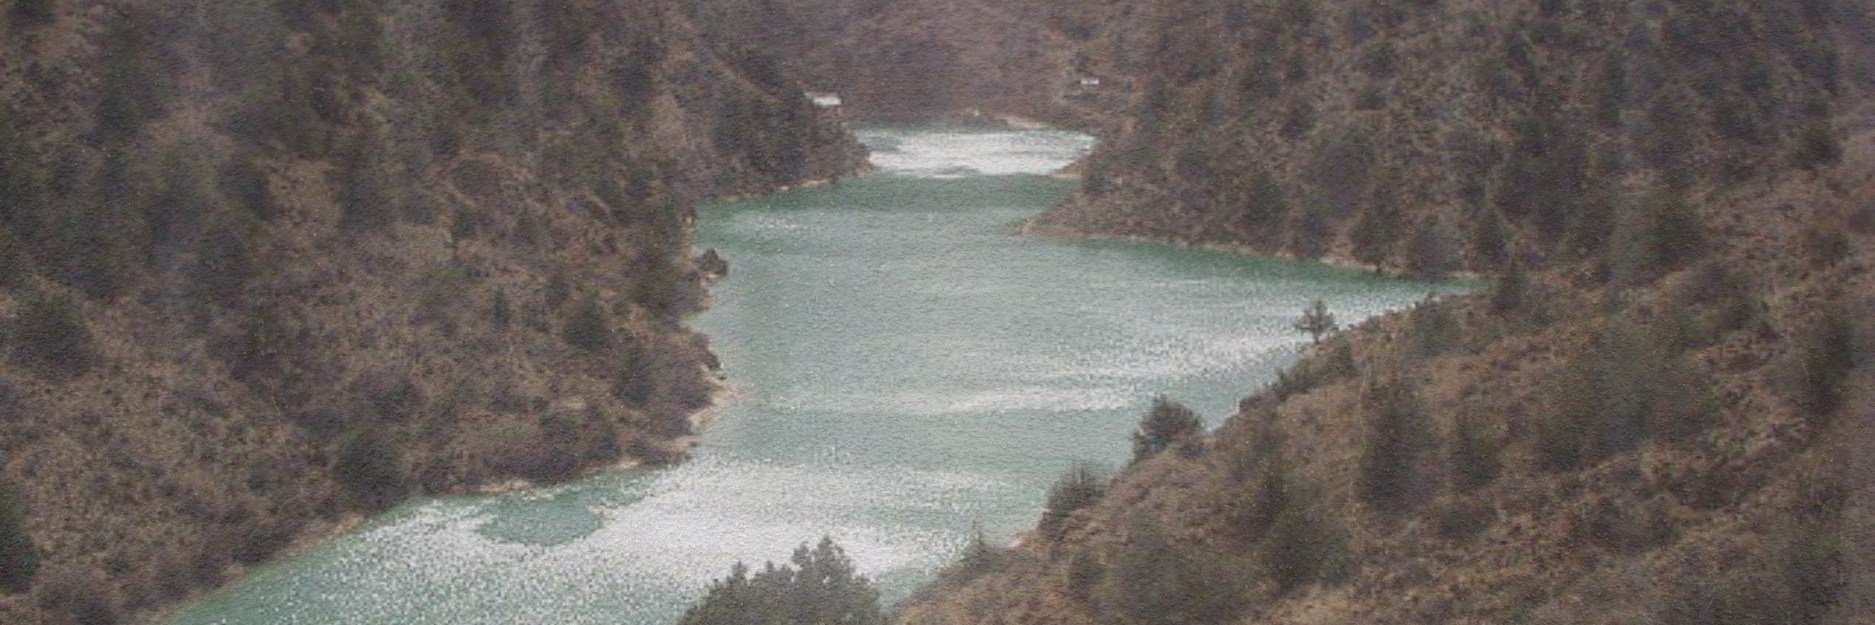 Wali Tang Dam